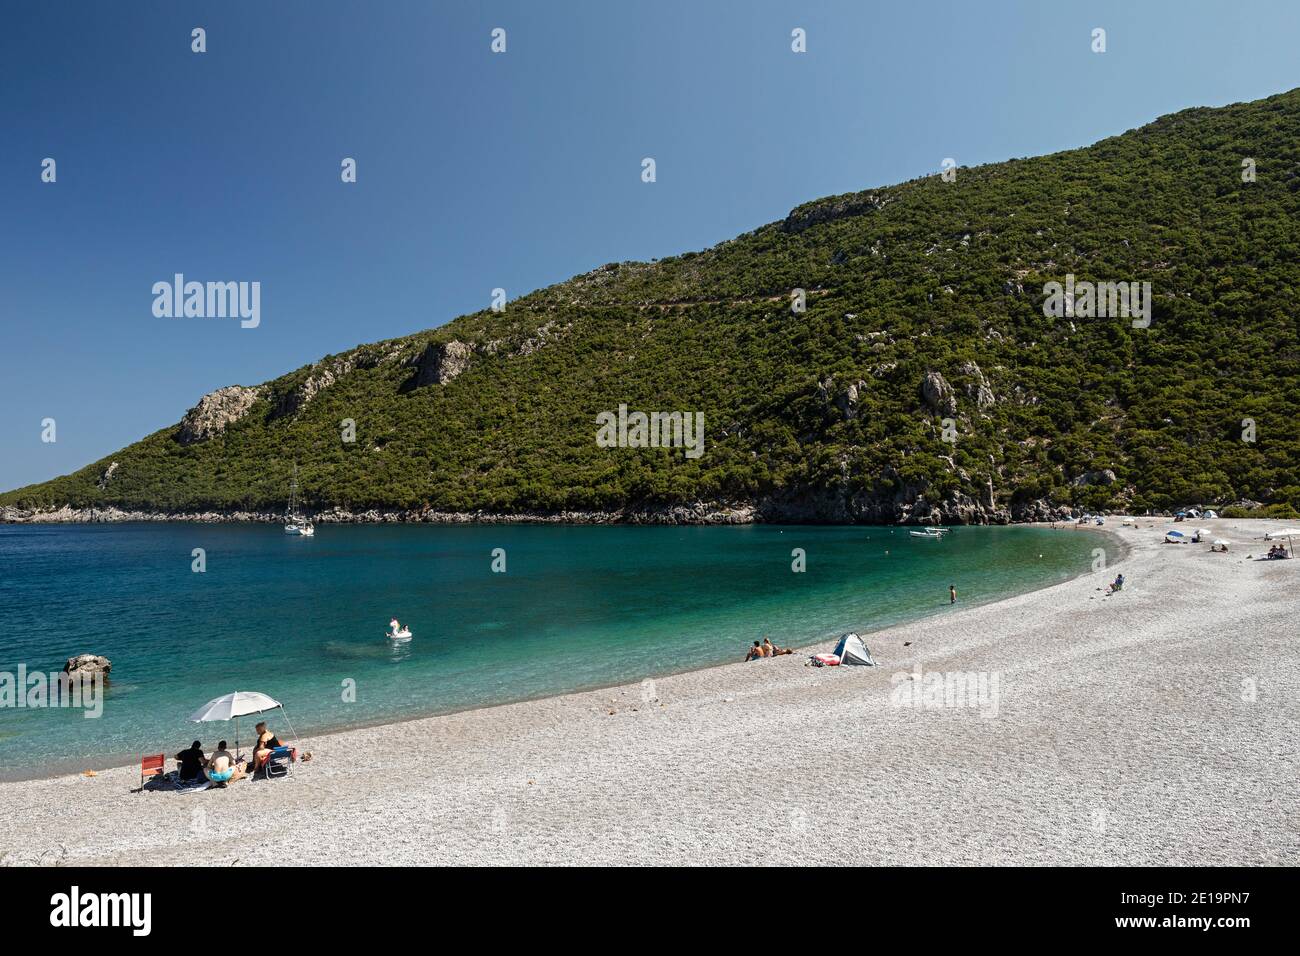 Vlychada beach, Peloponnese, Greece on July 28, 2020. / Παραλία Βλυχάδα, Πελοπόννησος, 28 Ιουλίου 2020. Stock Photo